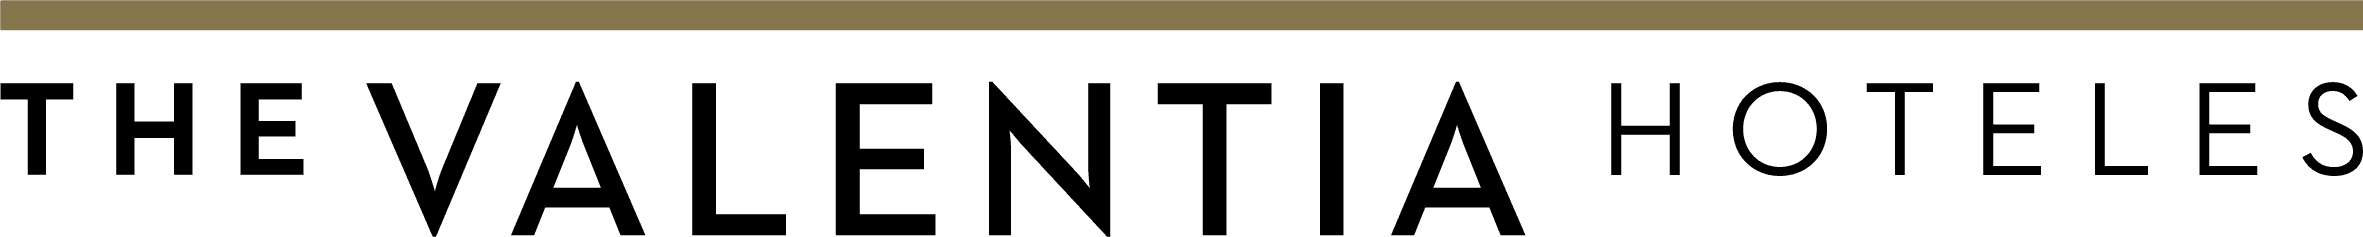 Frontdesk Internship logo